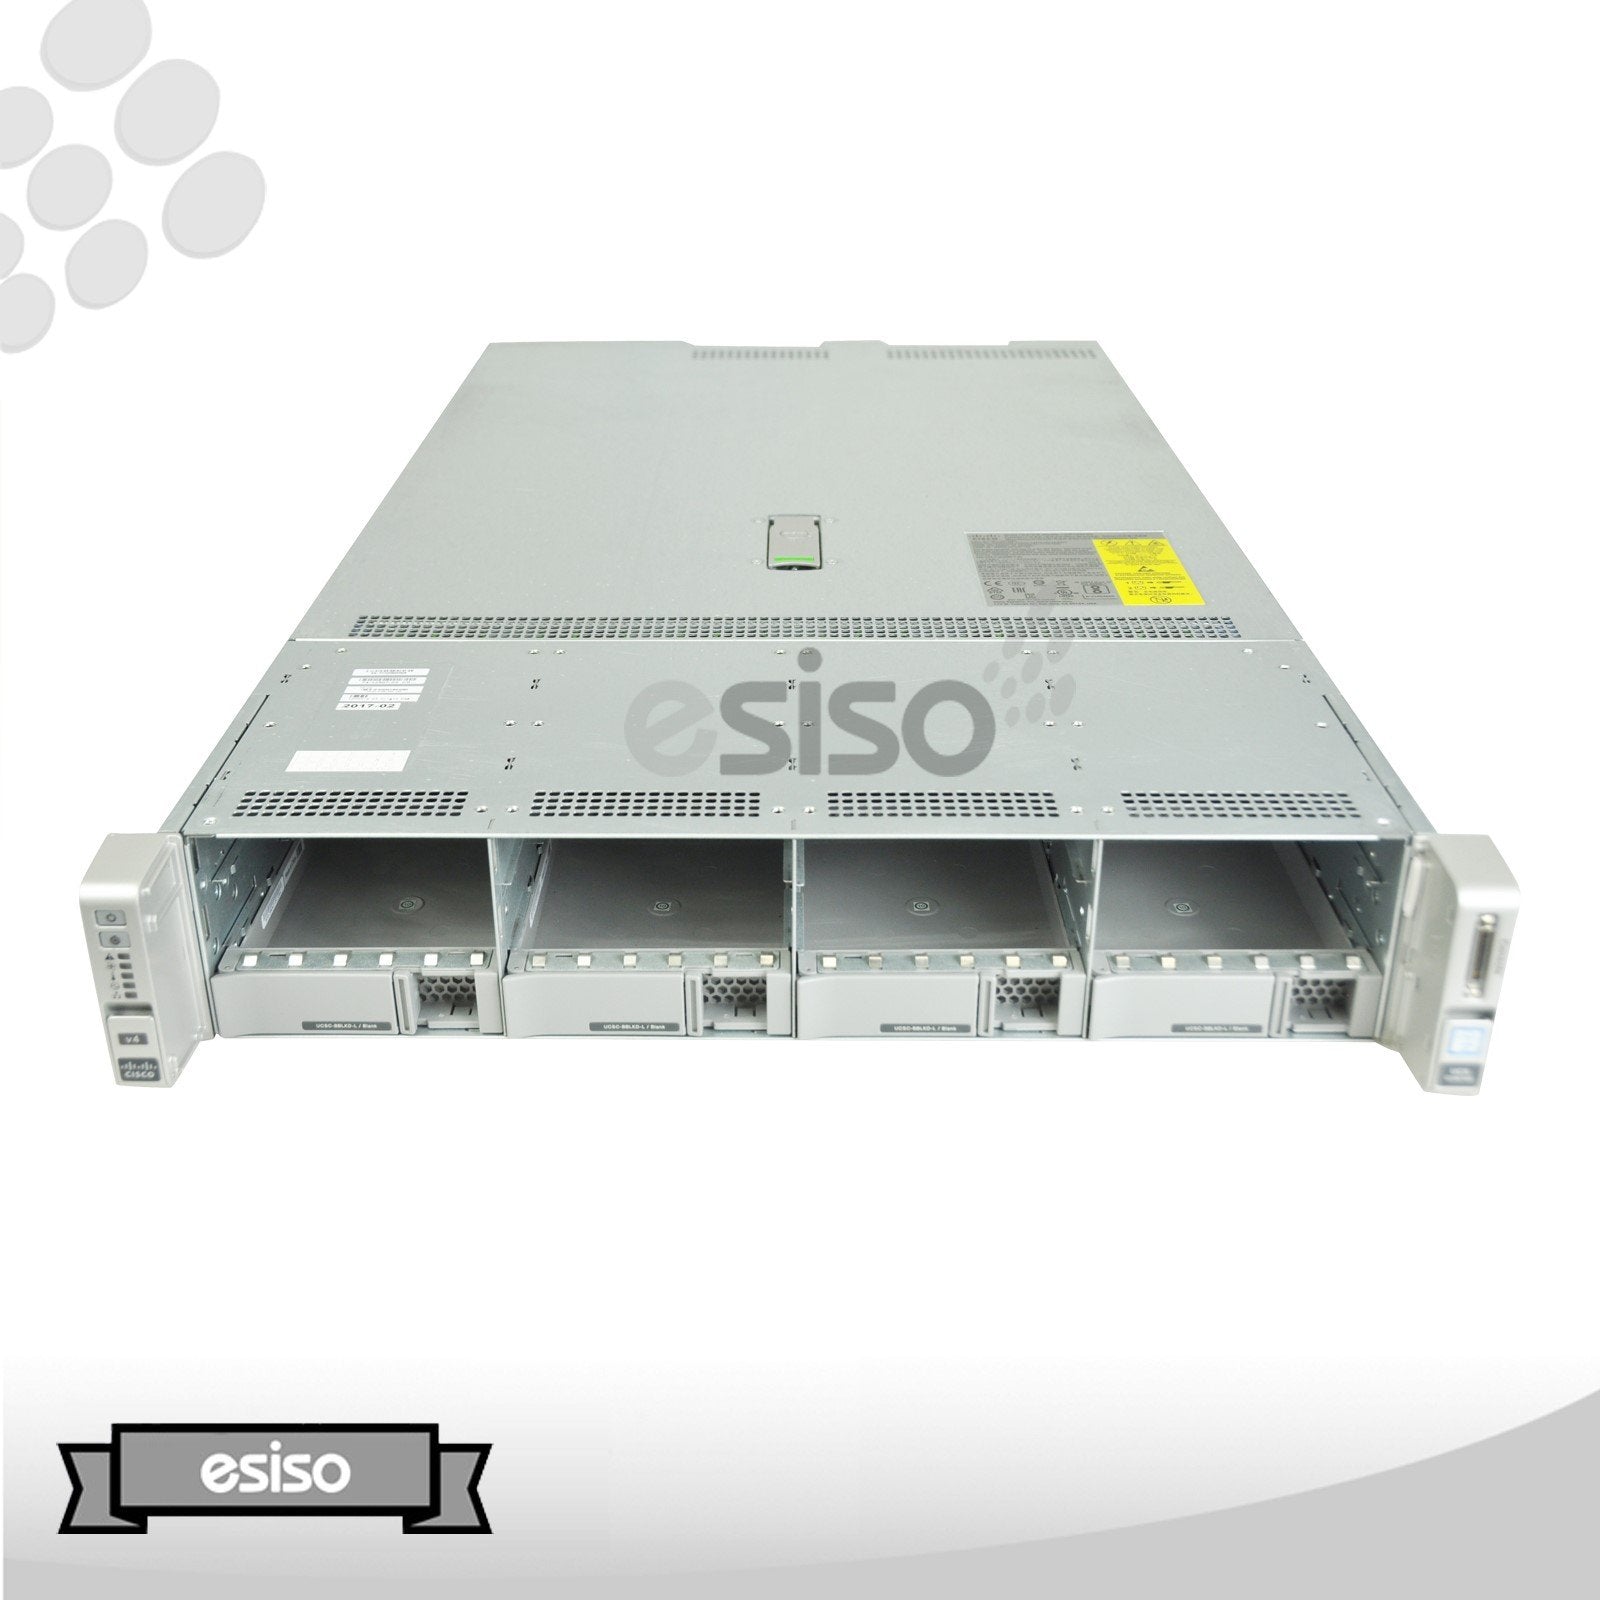 CISCO UCS C240 M4 12LFF 2x 8 CORE E5-2640v3 2.6GHz 32GB RAM 2x PSU NO RAIL